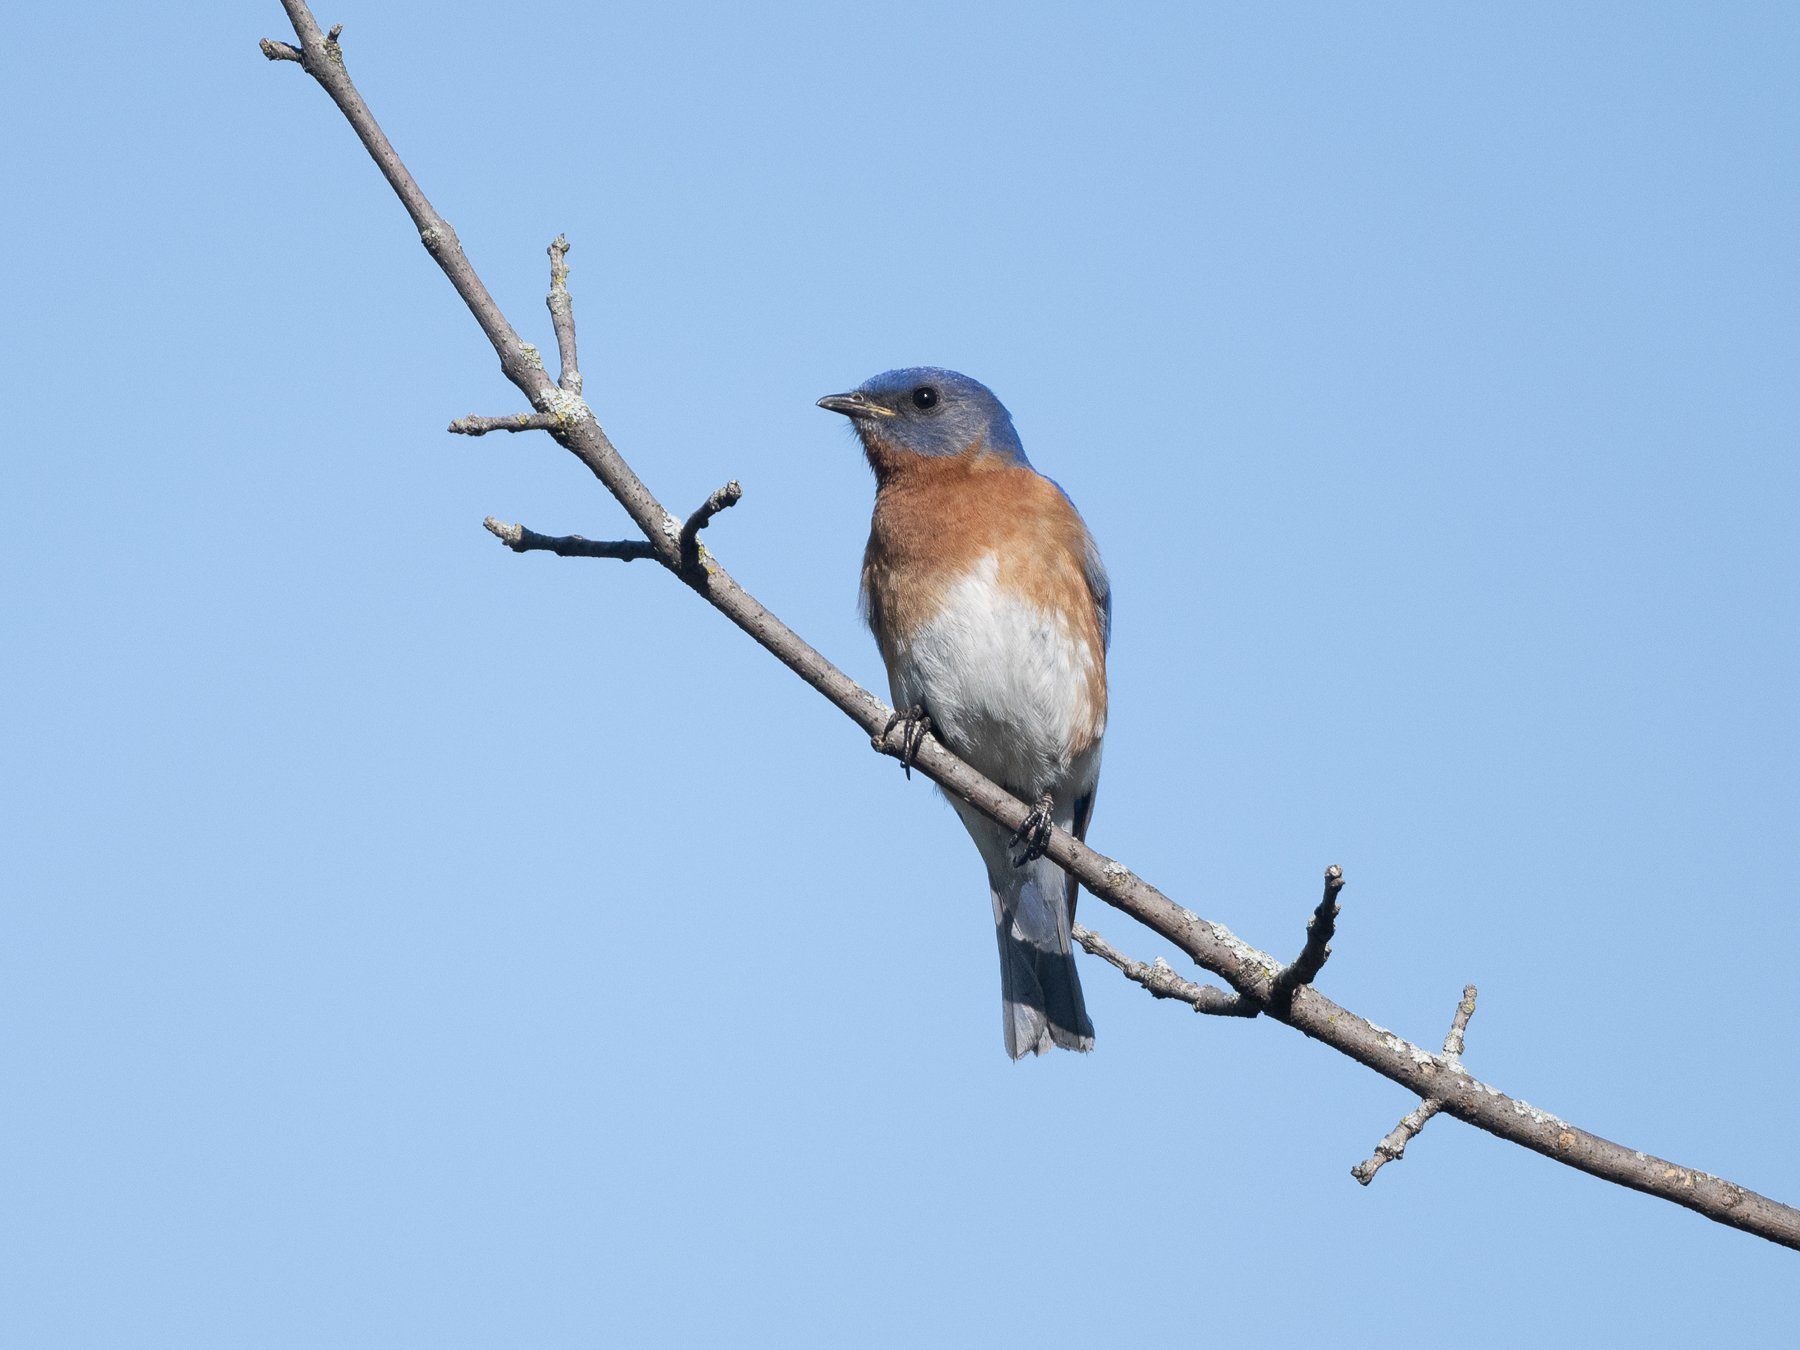   Eastern Bluebird (by Gary Shackelford)  